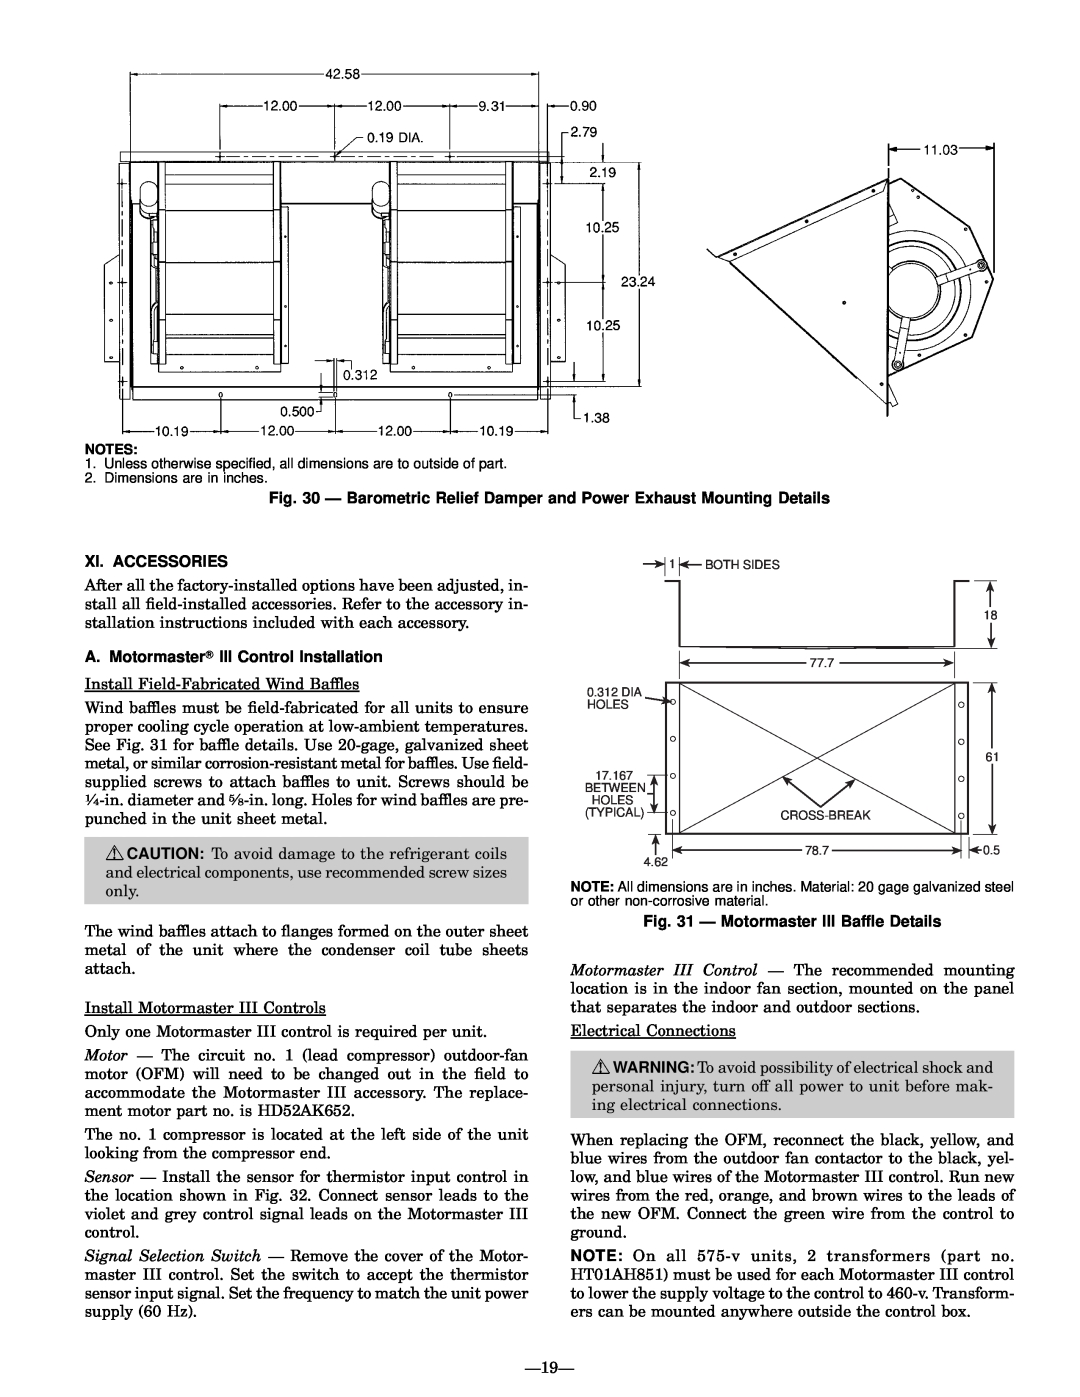 Bryant 580G manual Xi. Accessories, A. Motormaster III Control Installation, Ð Motormaster III Baffle Details 